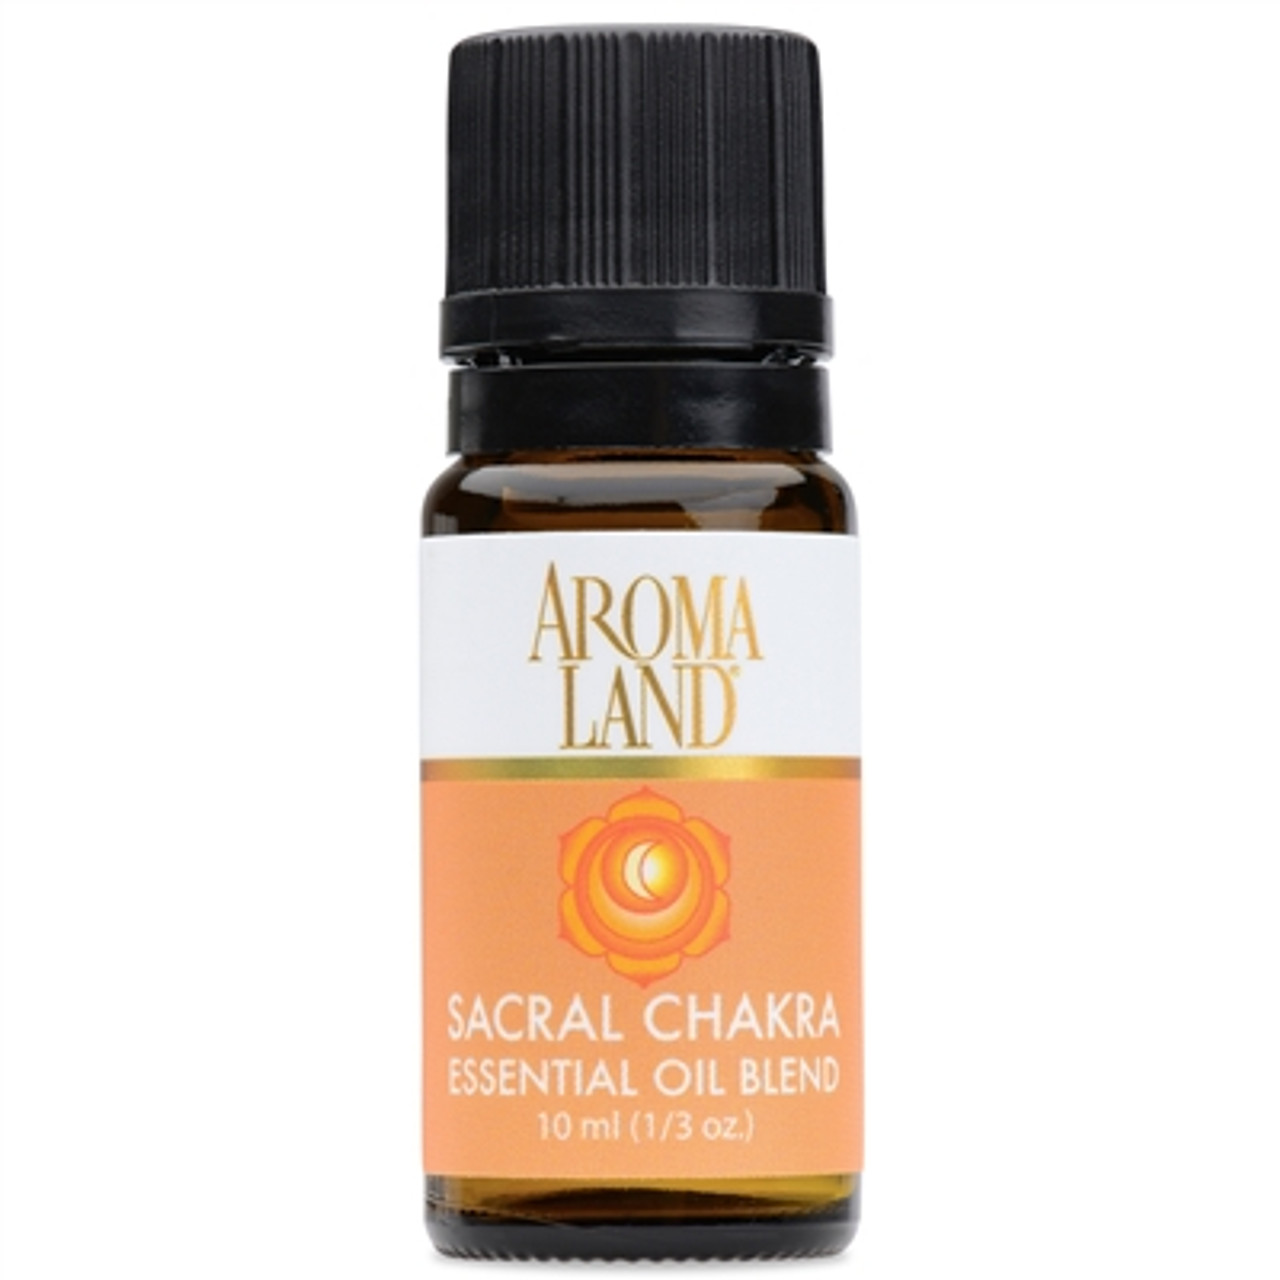 Sacral Chakra Fragrance Oil